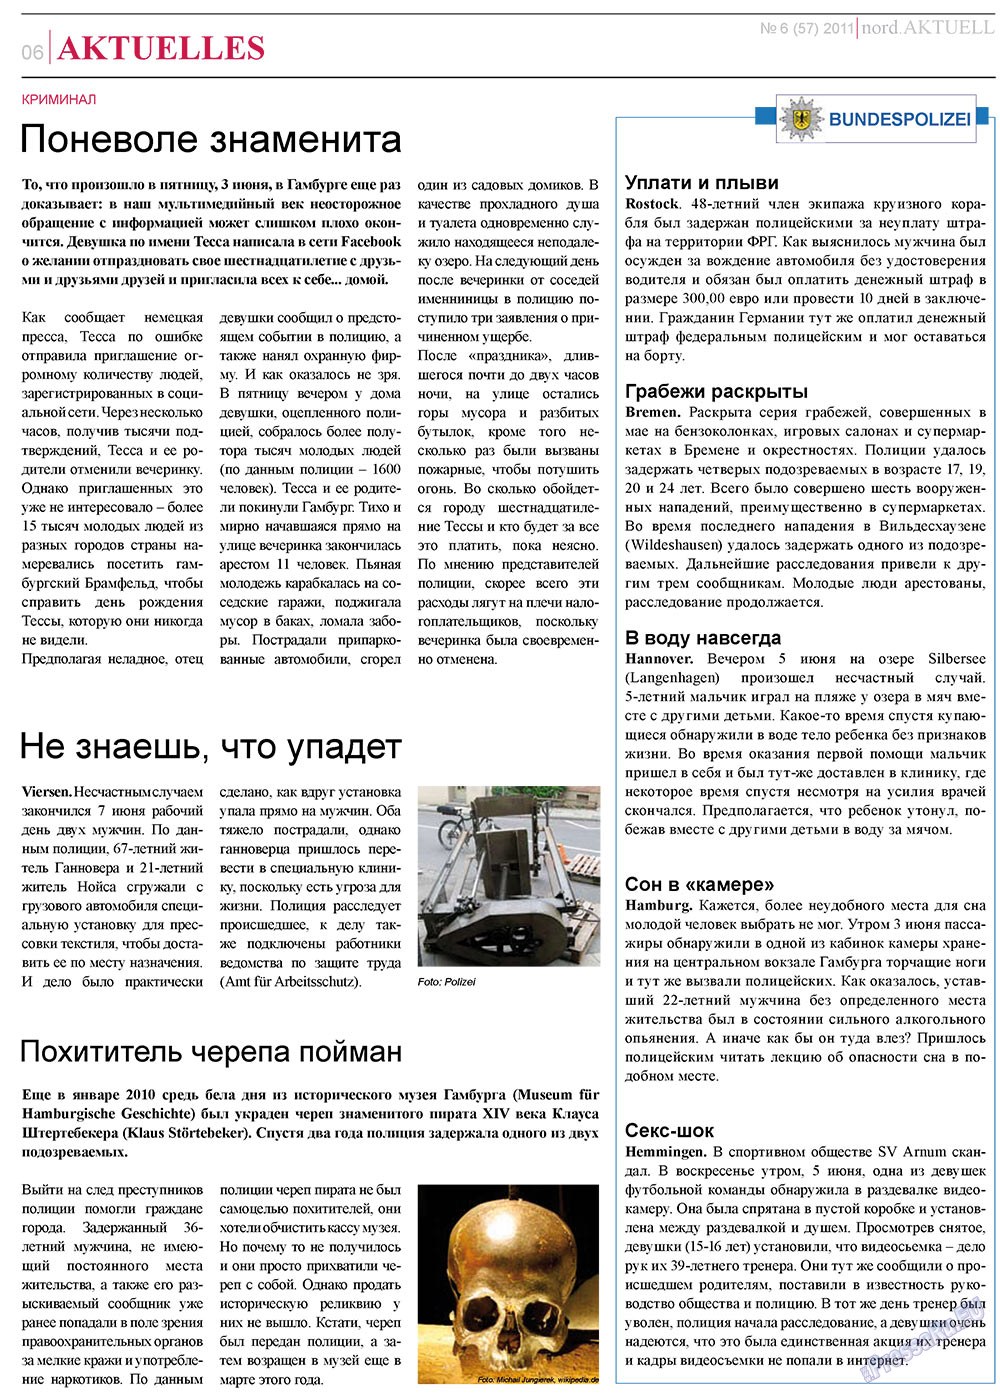 nord.Aktuell, газета. 2011 №6 стр.6